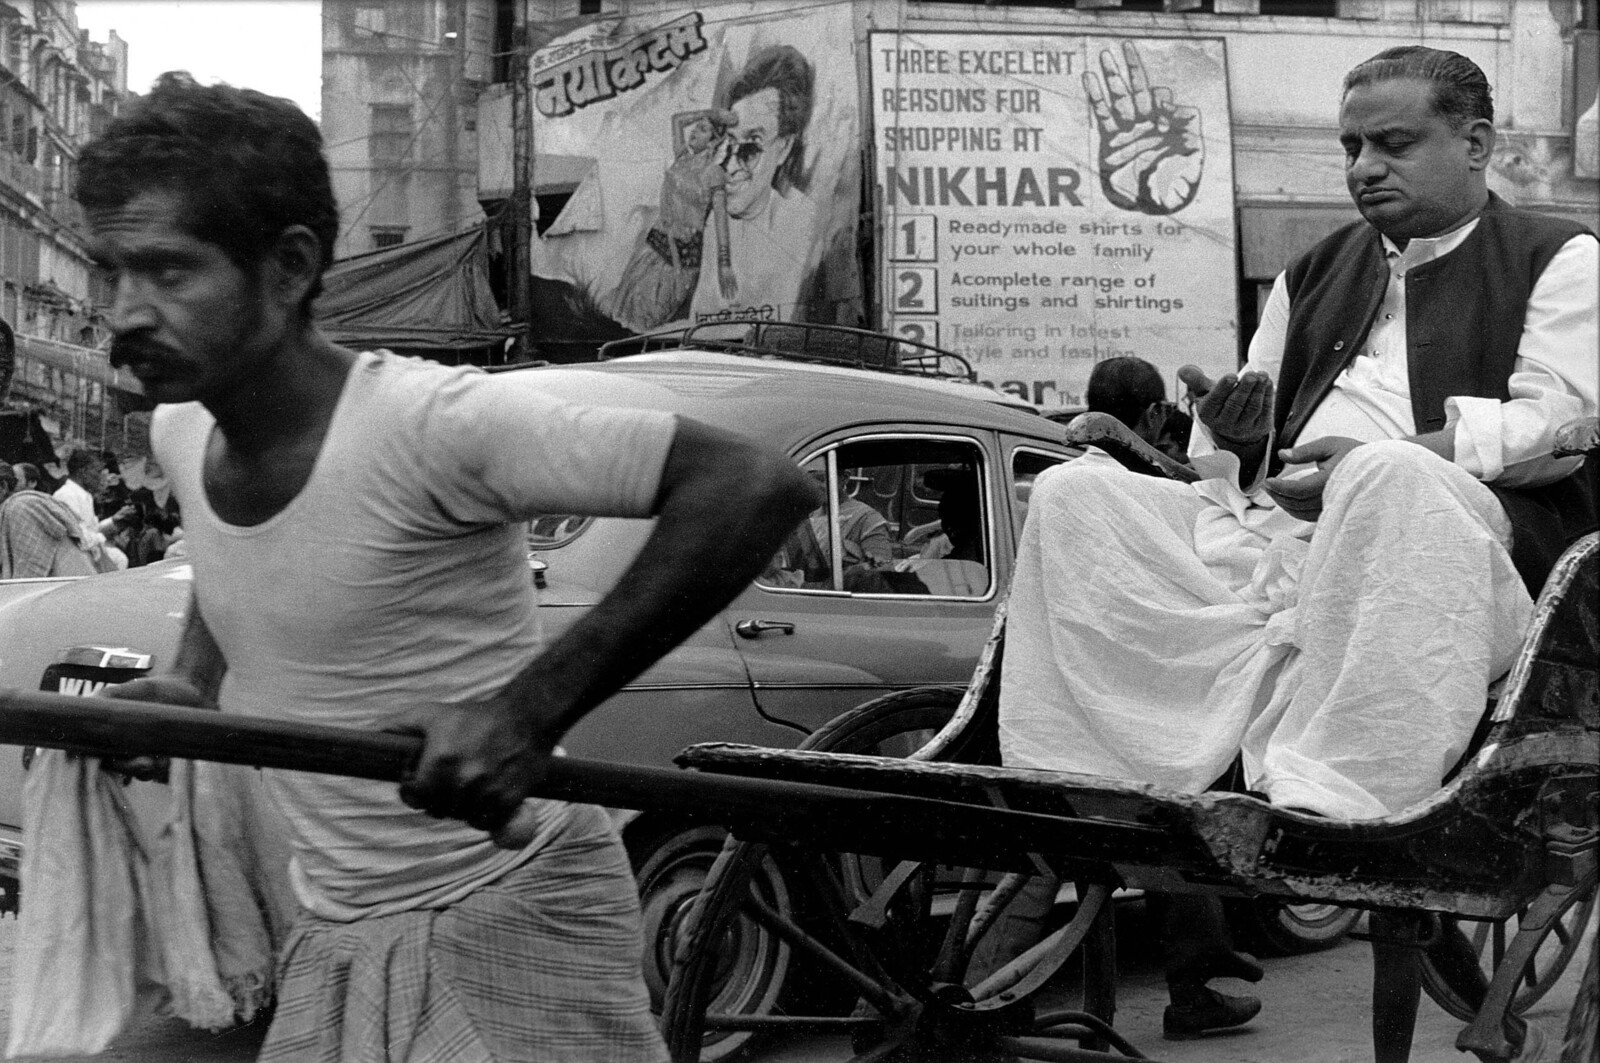 India, Calcutta 1984